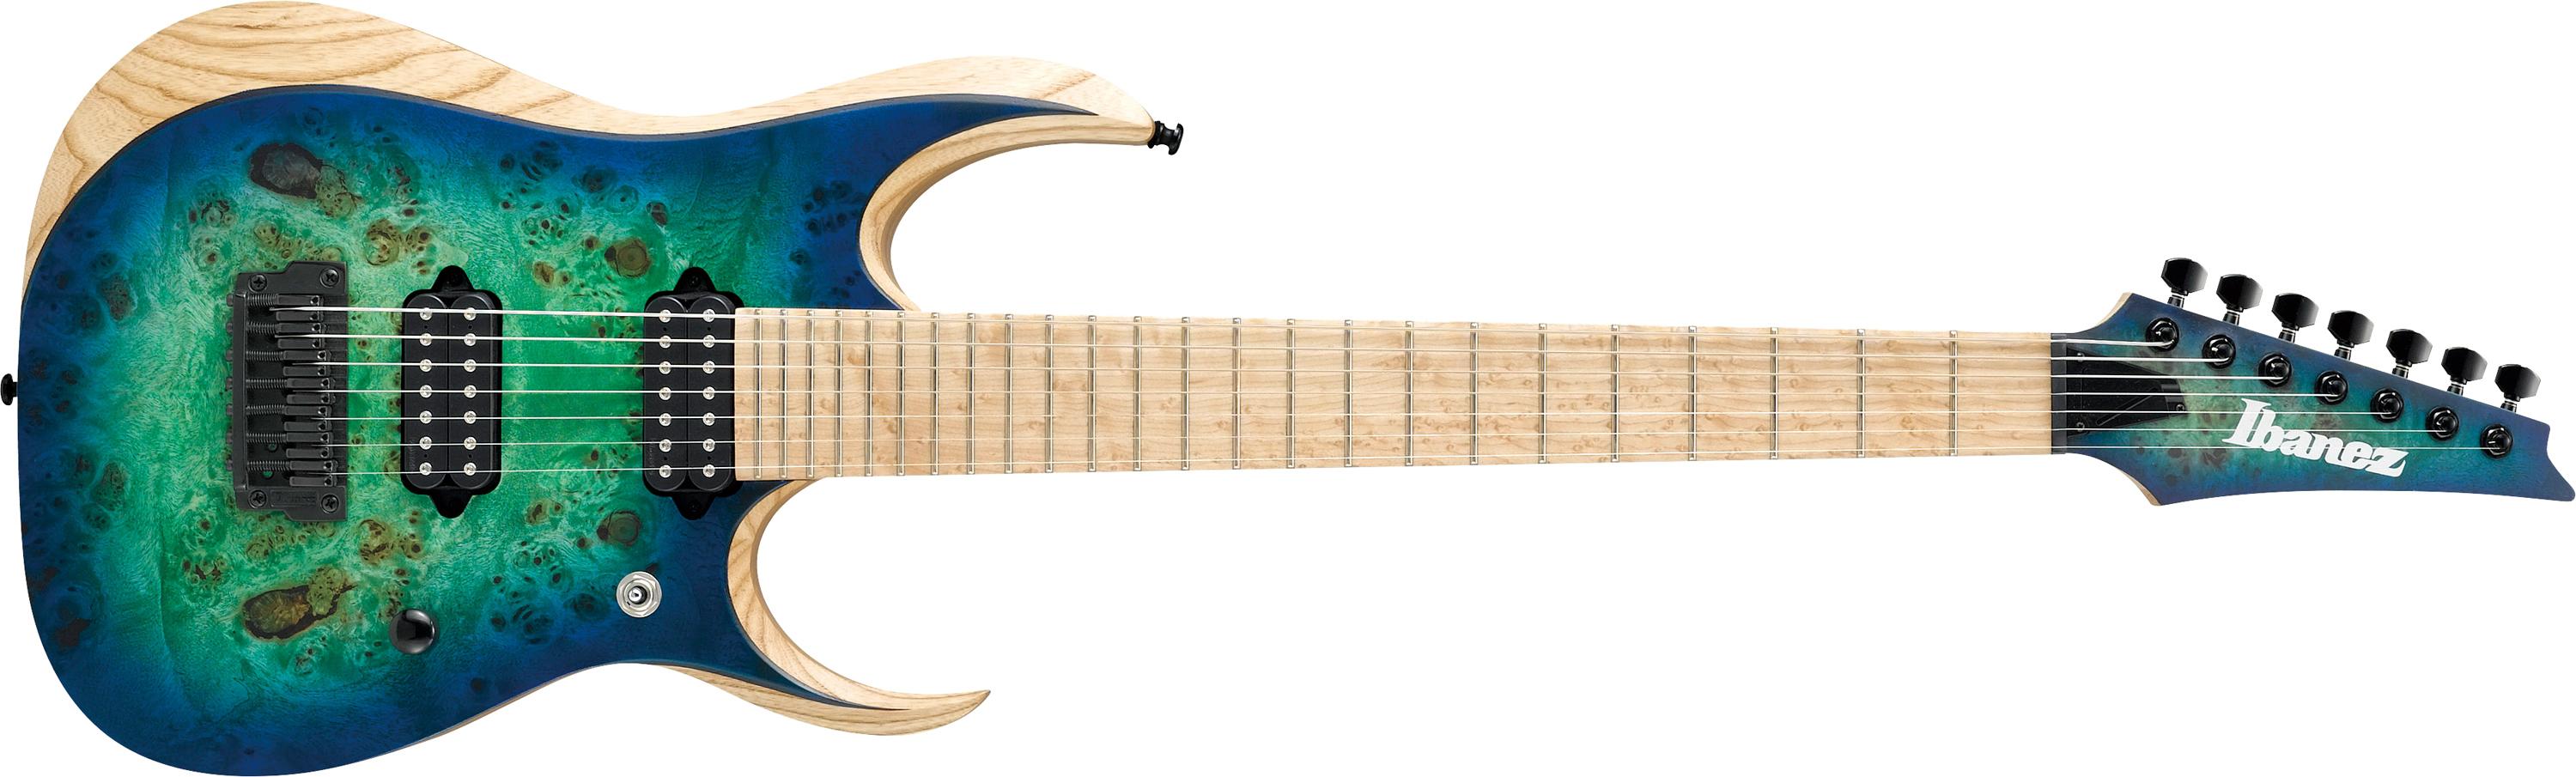 Ibañez - Guitarra Eléctrica RGD Iron Label de 7 Cuerdas, Color: Azul Mod.RGDIX7MPB-SBB_164